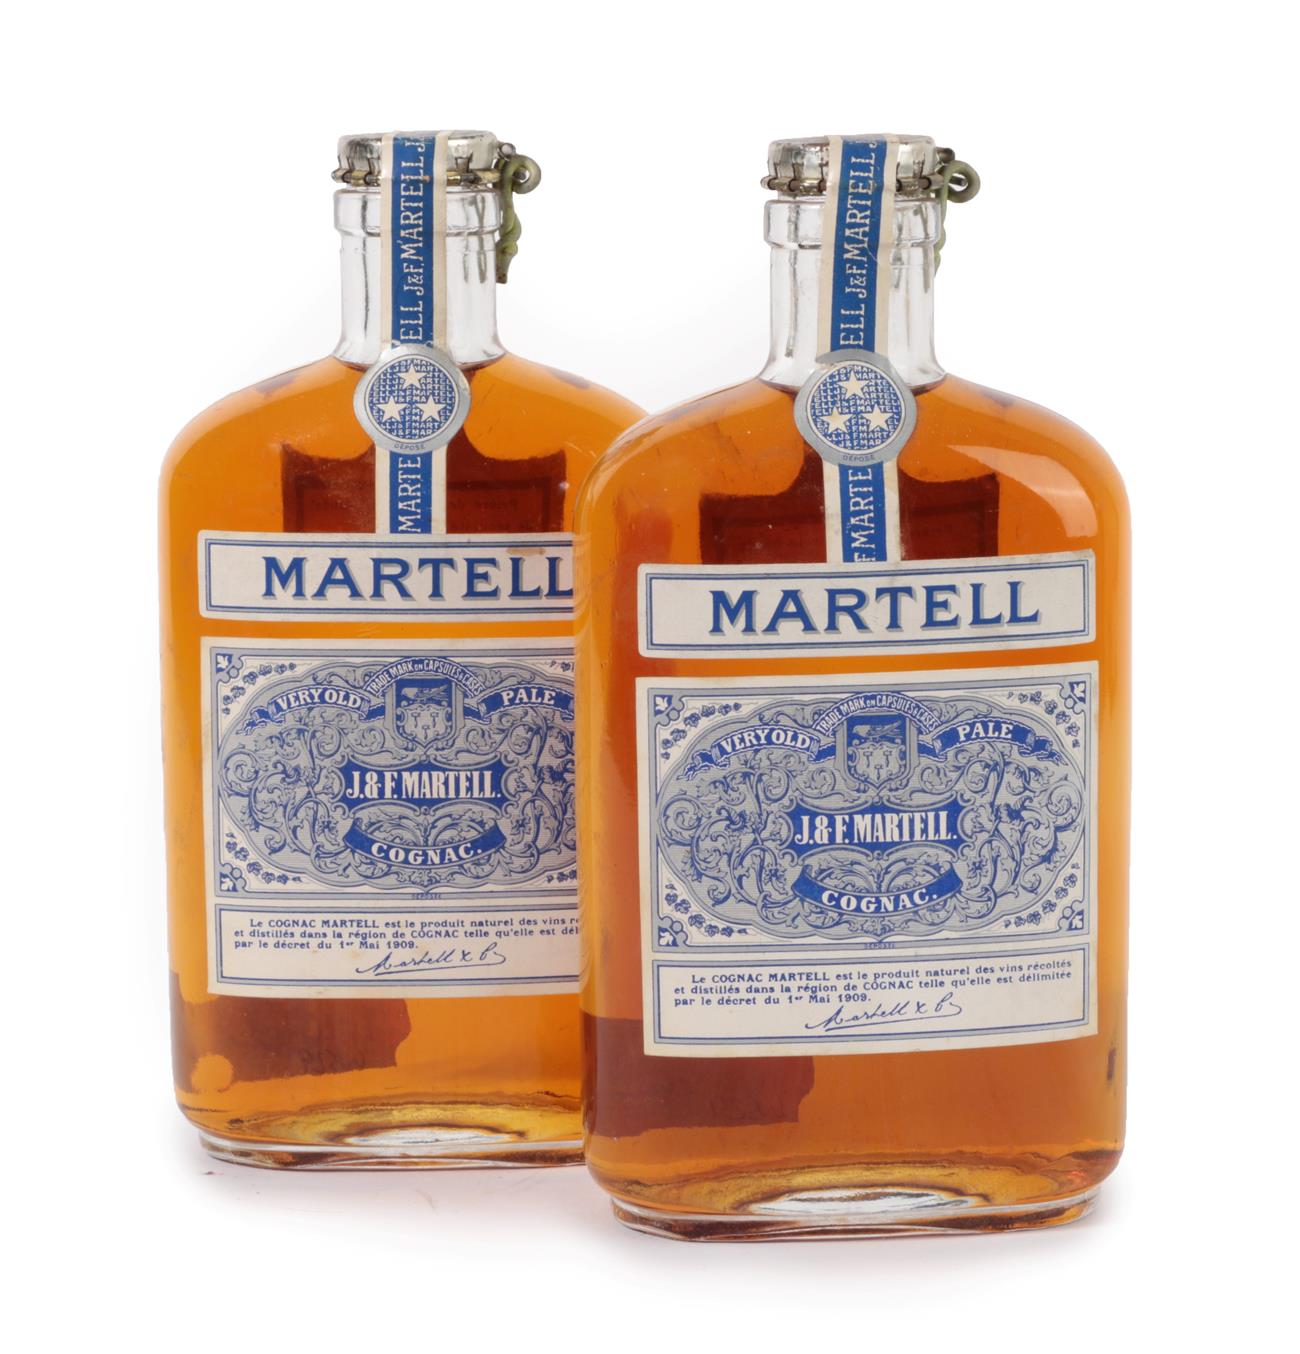 Lot 5061 - J & F Martell, Very Old Pale 3 Star Cognac, 1950s bottling, 1/4 flask (2 bottles)